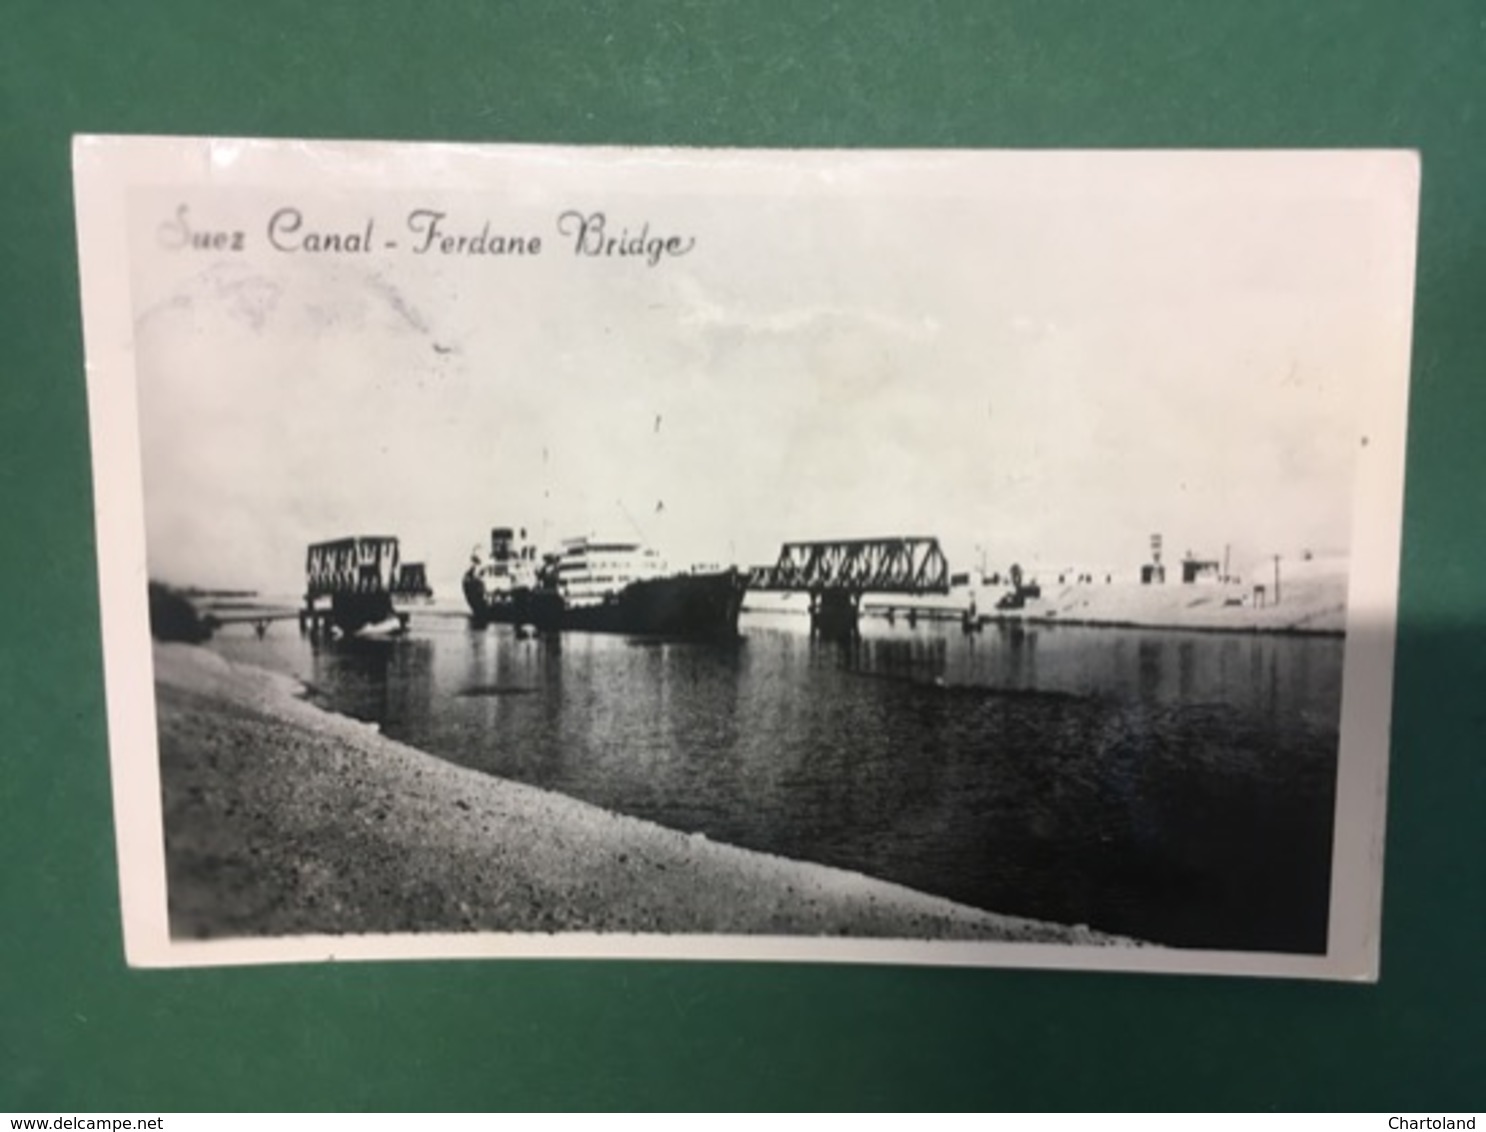 Cartolina Suez Canal - Ferdane Bridge - 1960 - Non Classificati